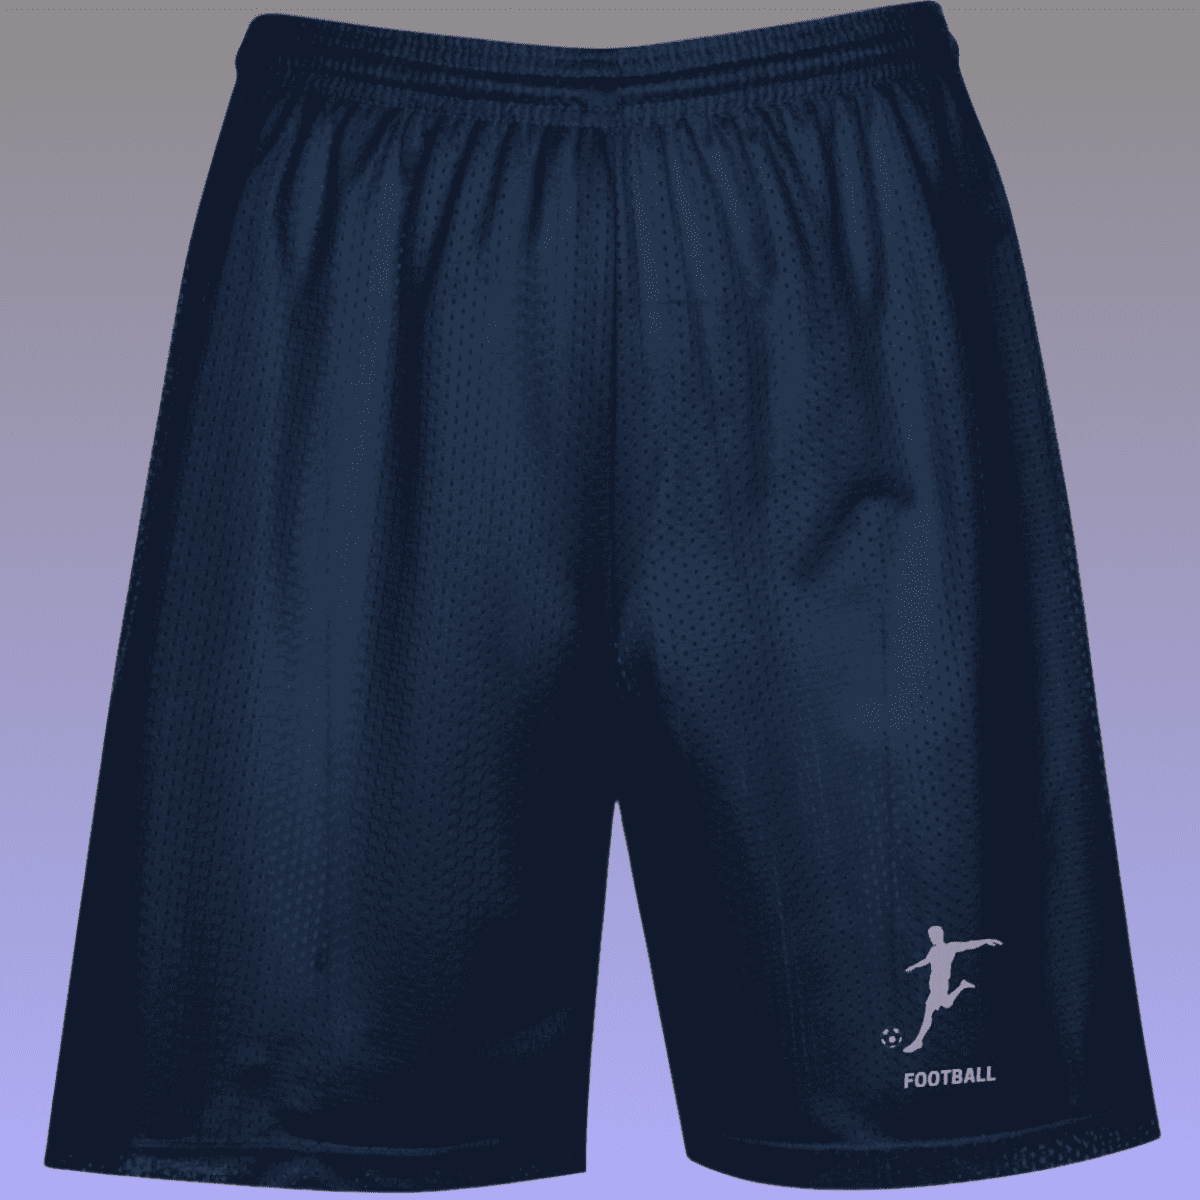 Men's Navy Football Performance Mesh Shorts